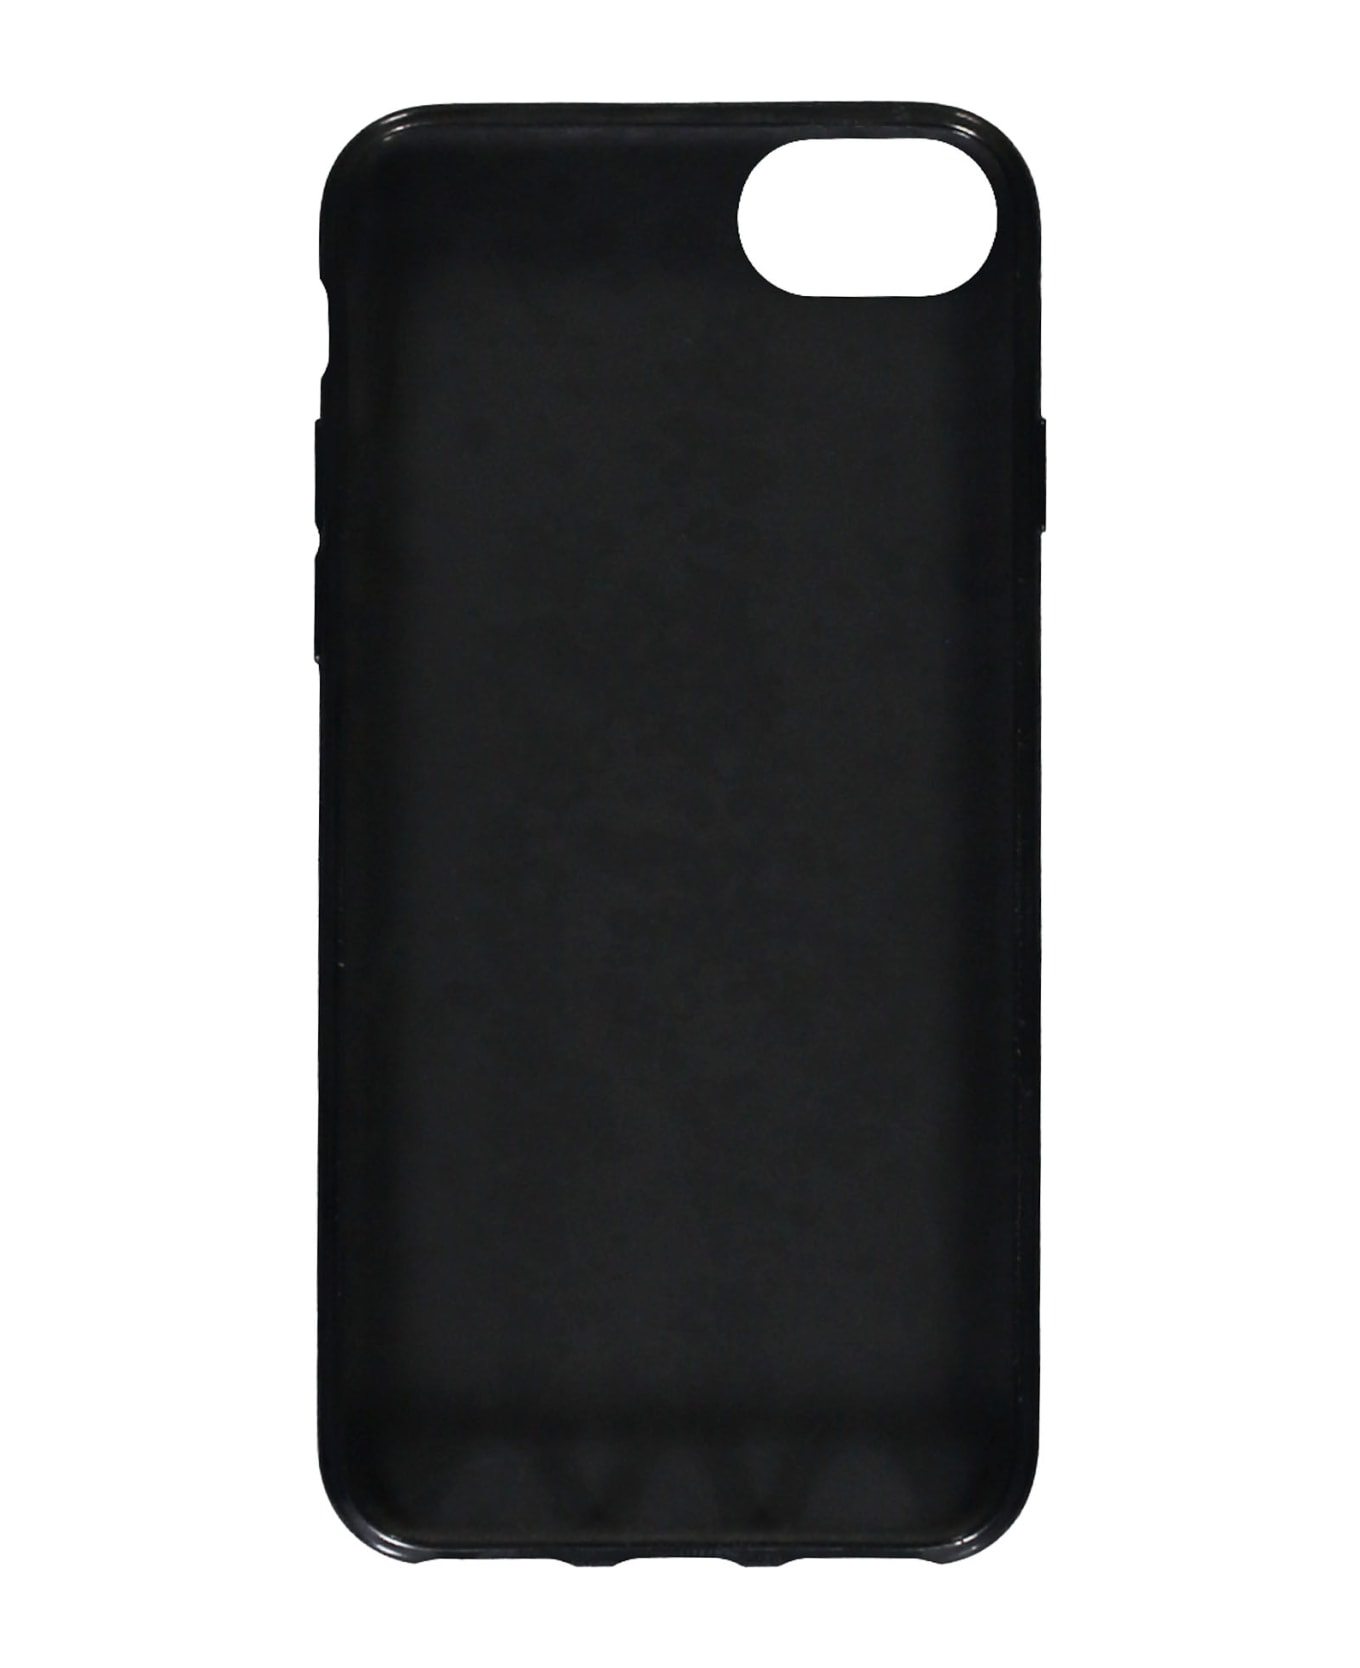 Balmain Iphone Case - black デジタルアクセサリー